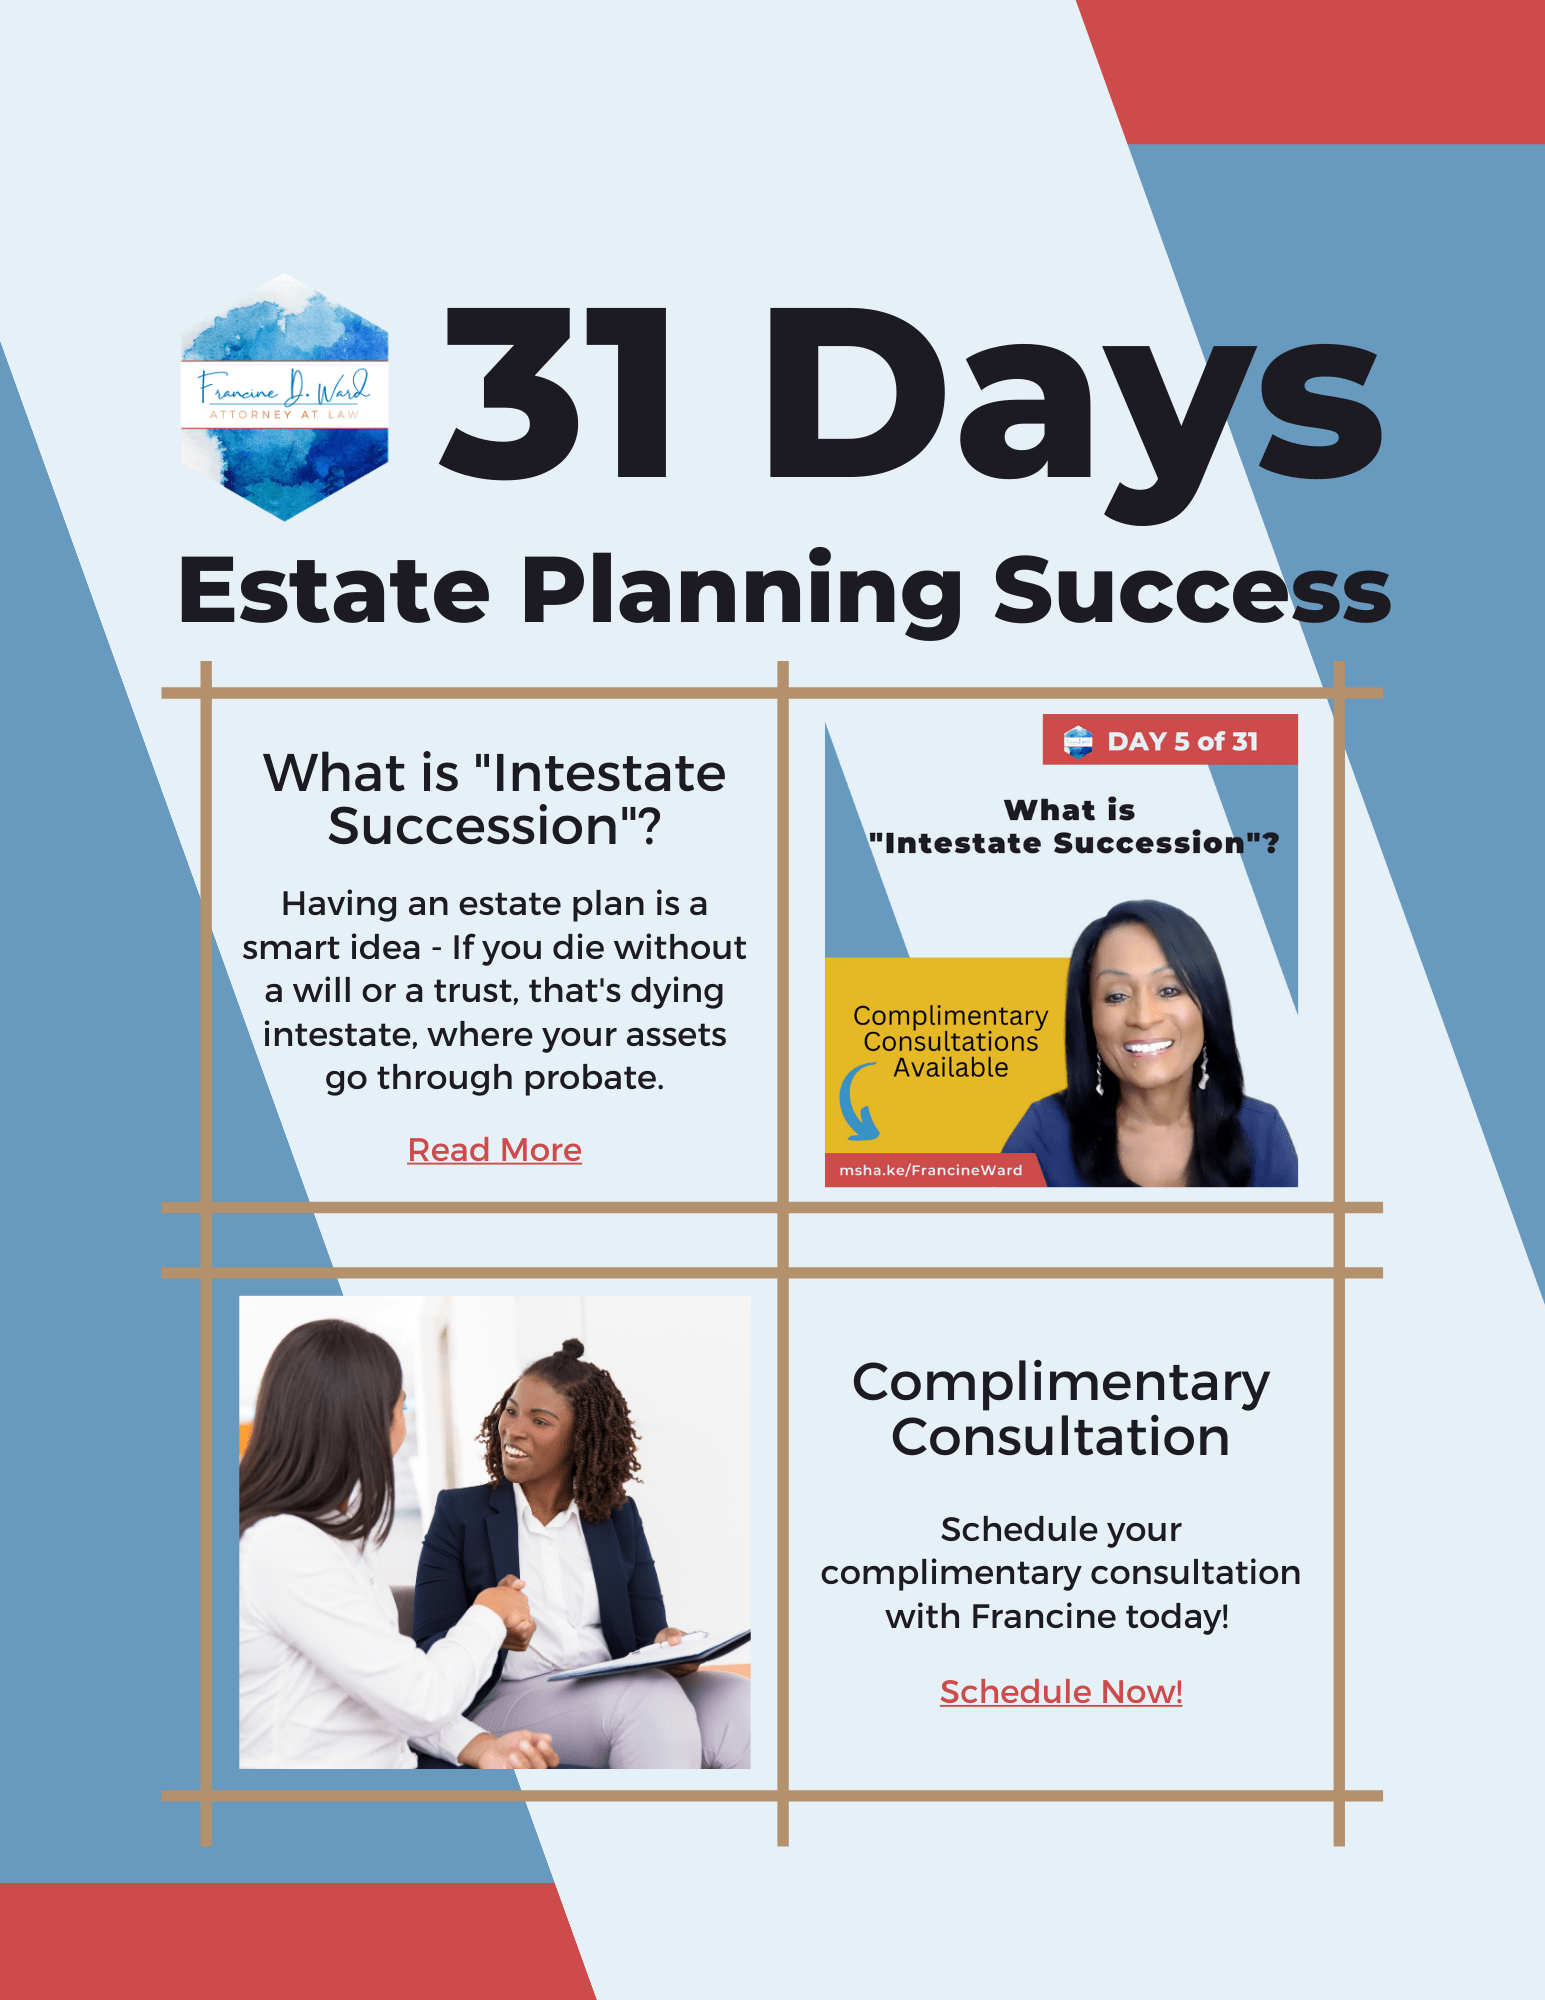 31 Days of Estate Planning